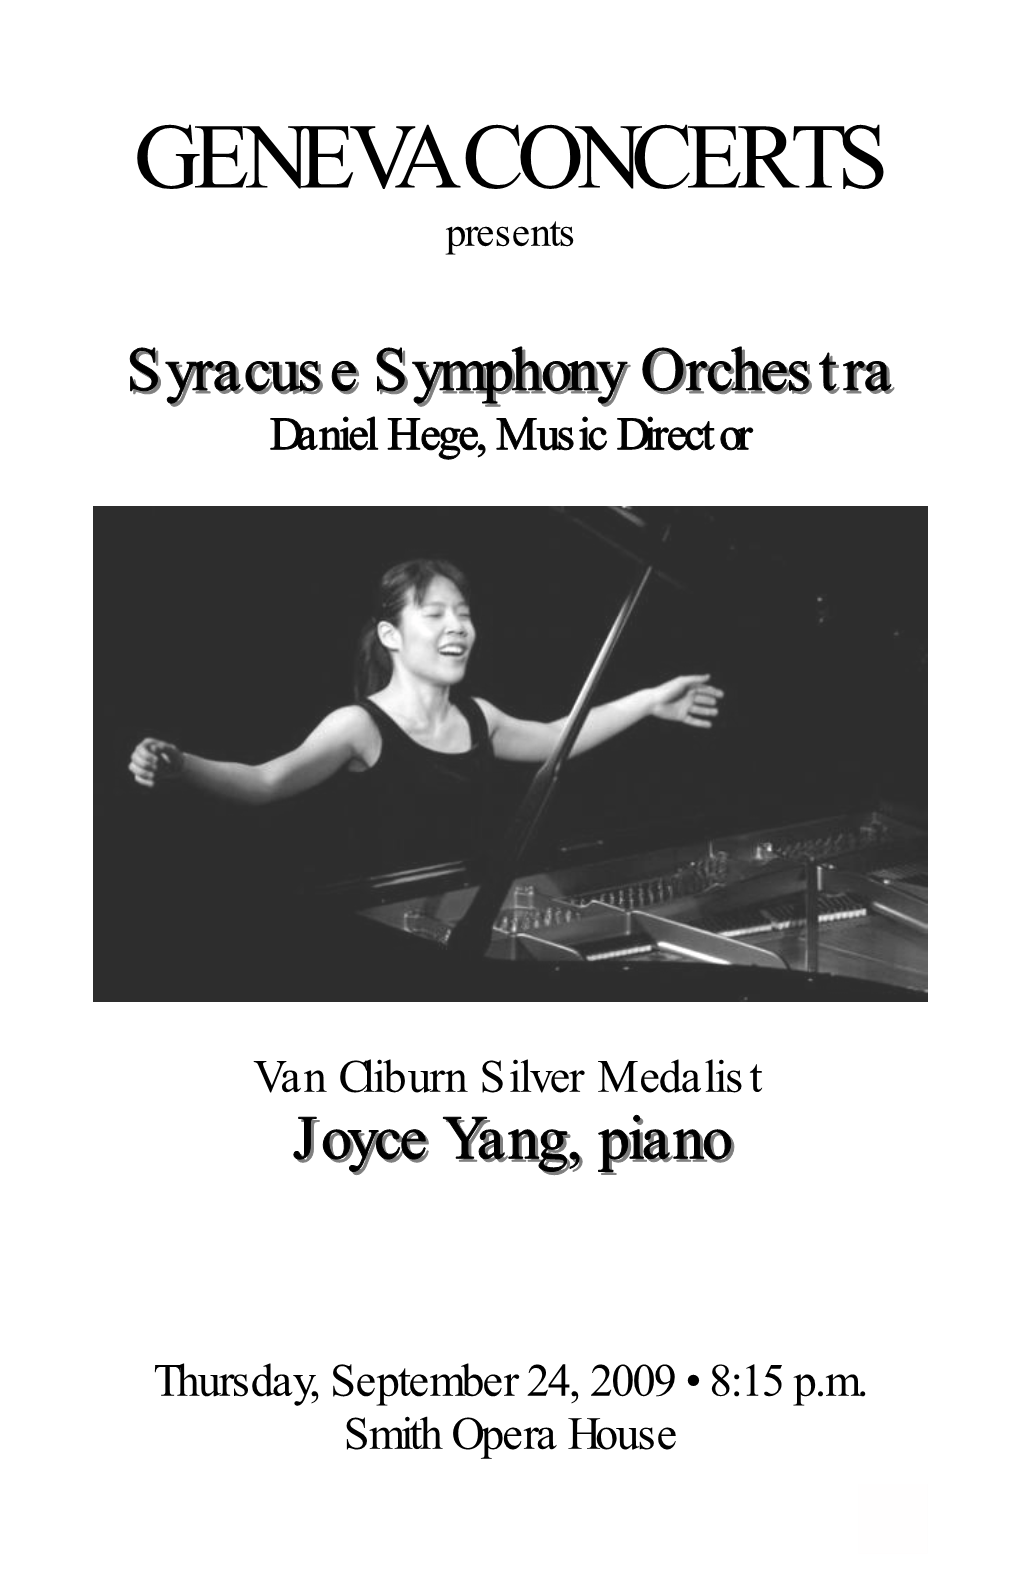 SYRACUSE SYMPHONY ORCHESTRA Daniel Hege, Music Director